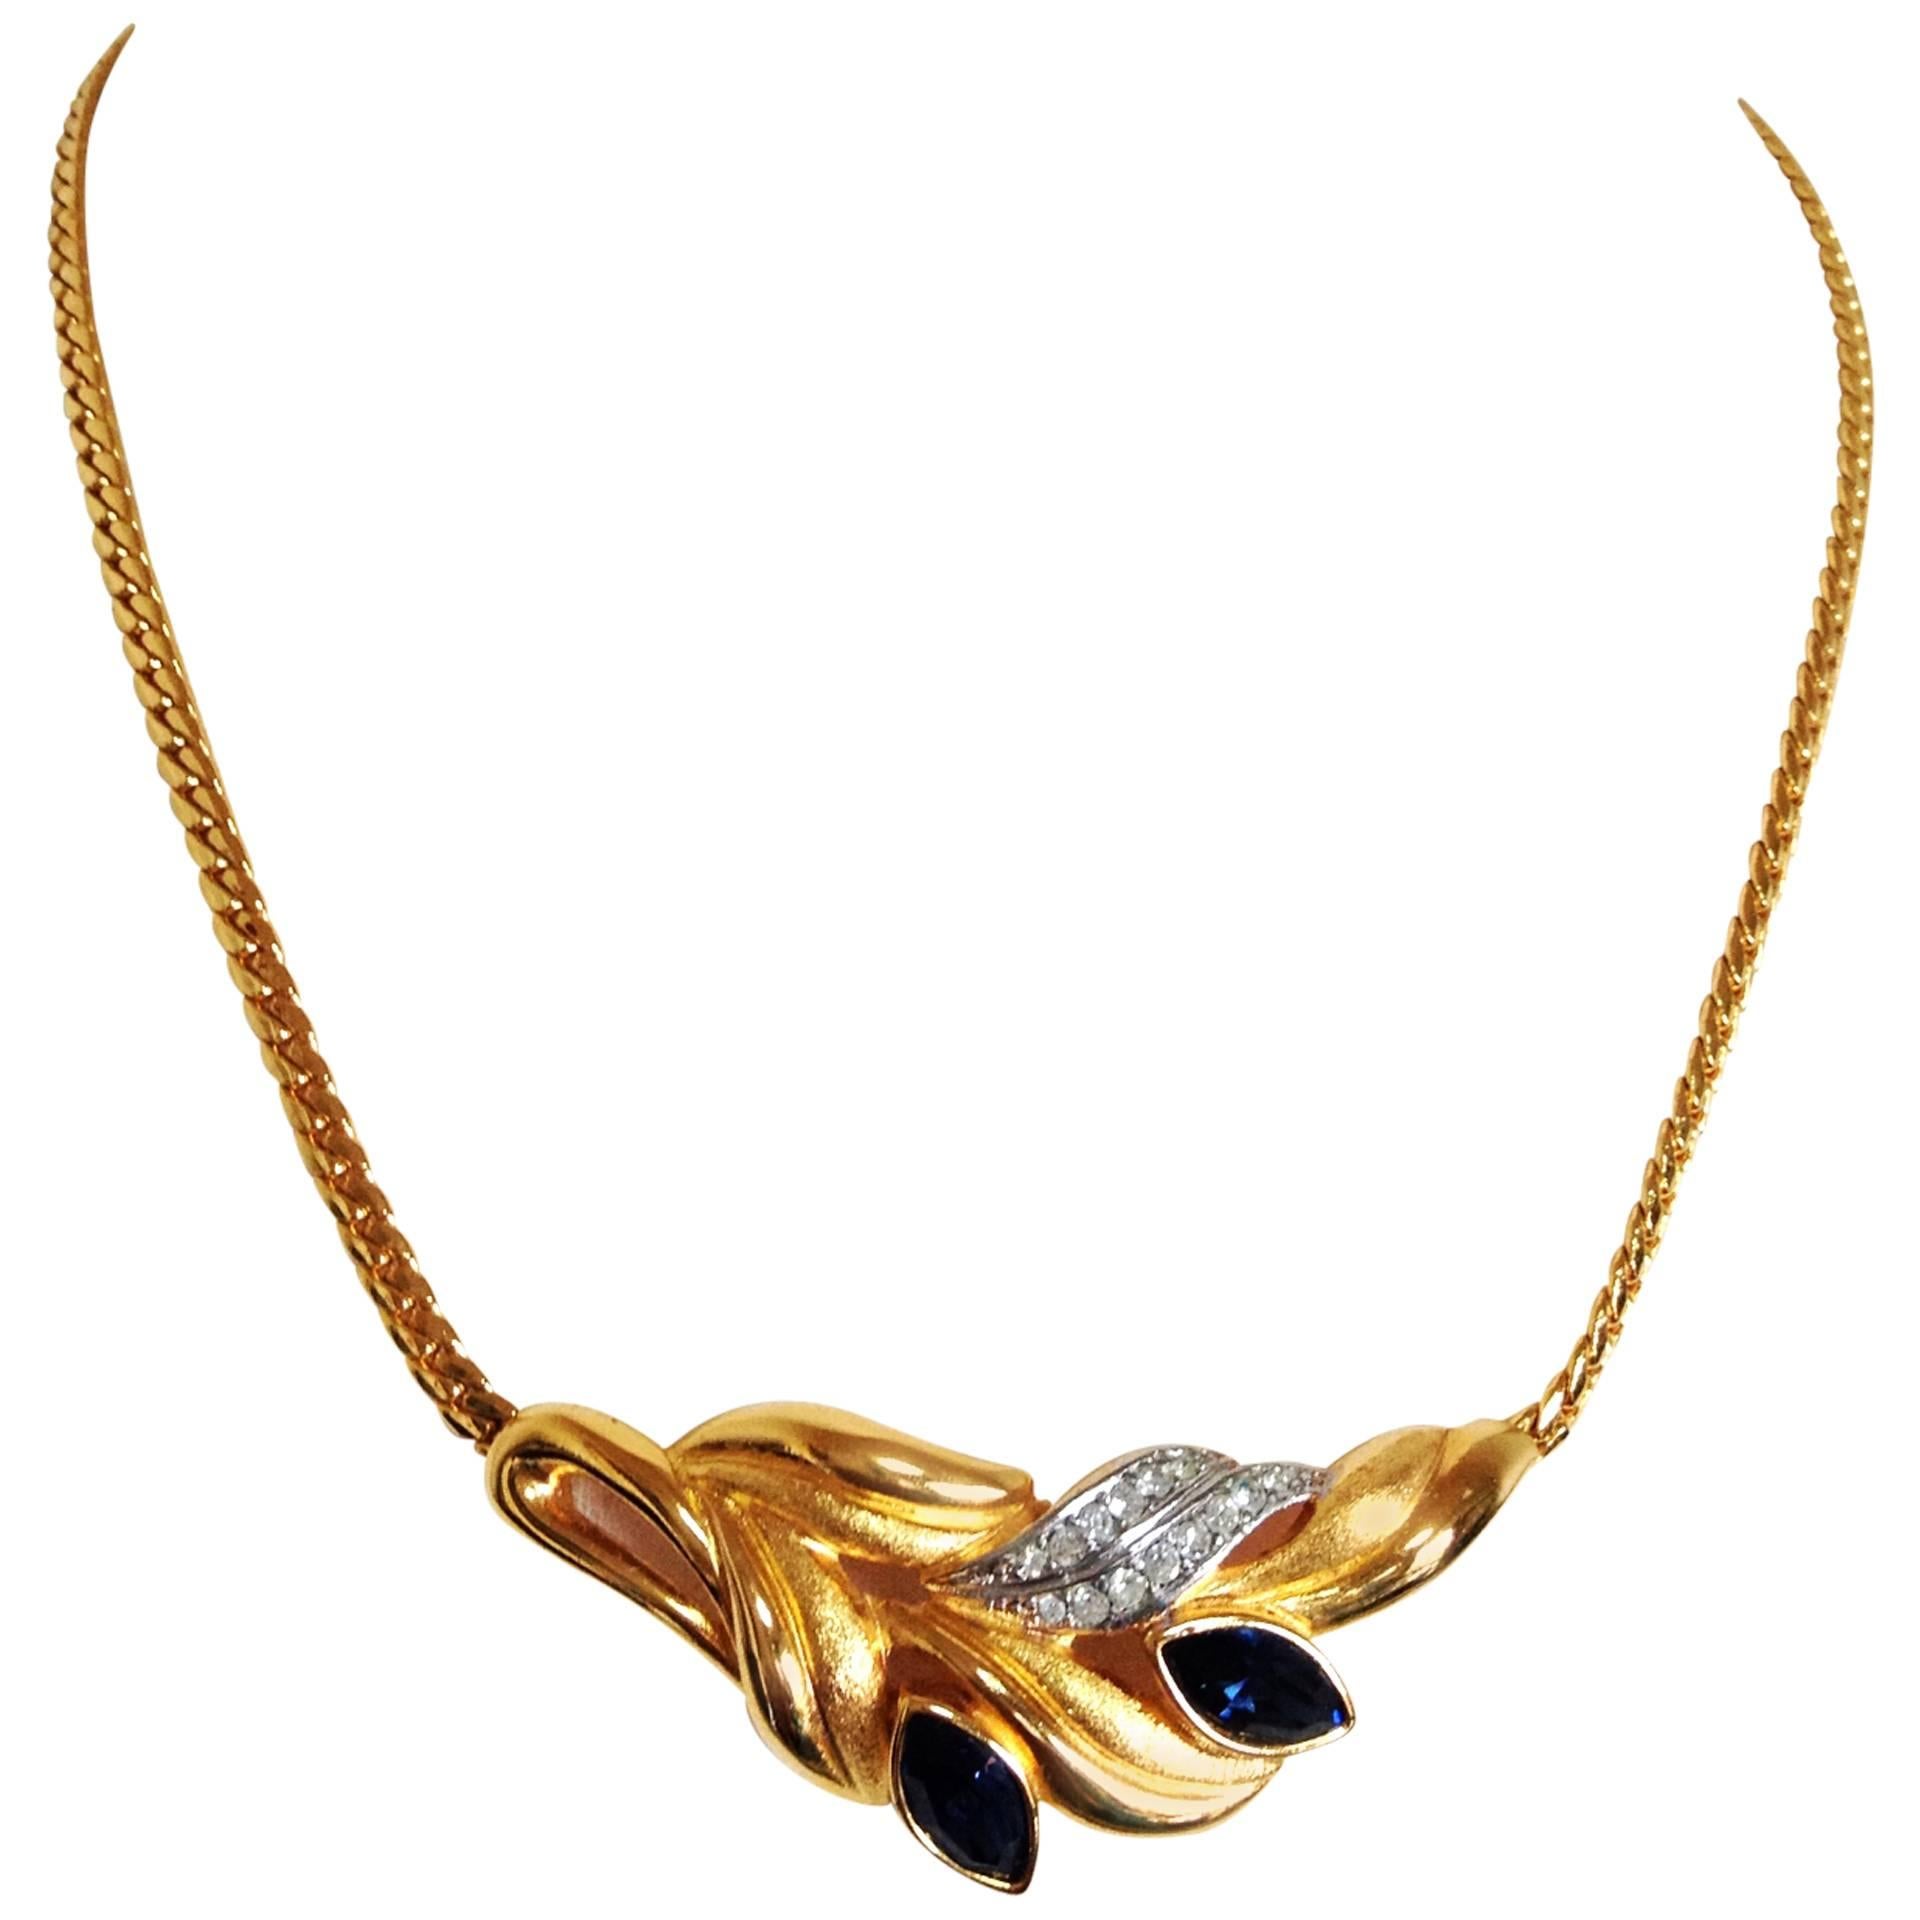 Vintage LANVIN golden chain skinny necklace with golden leaf motif pendant top For Sale